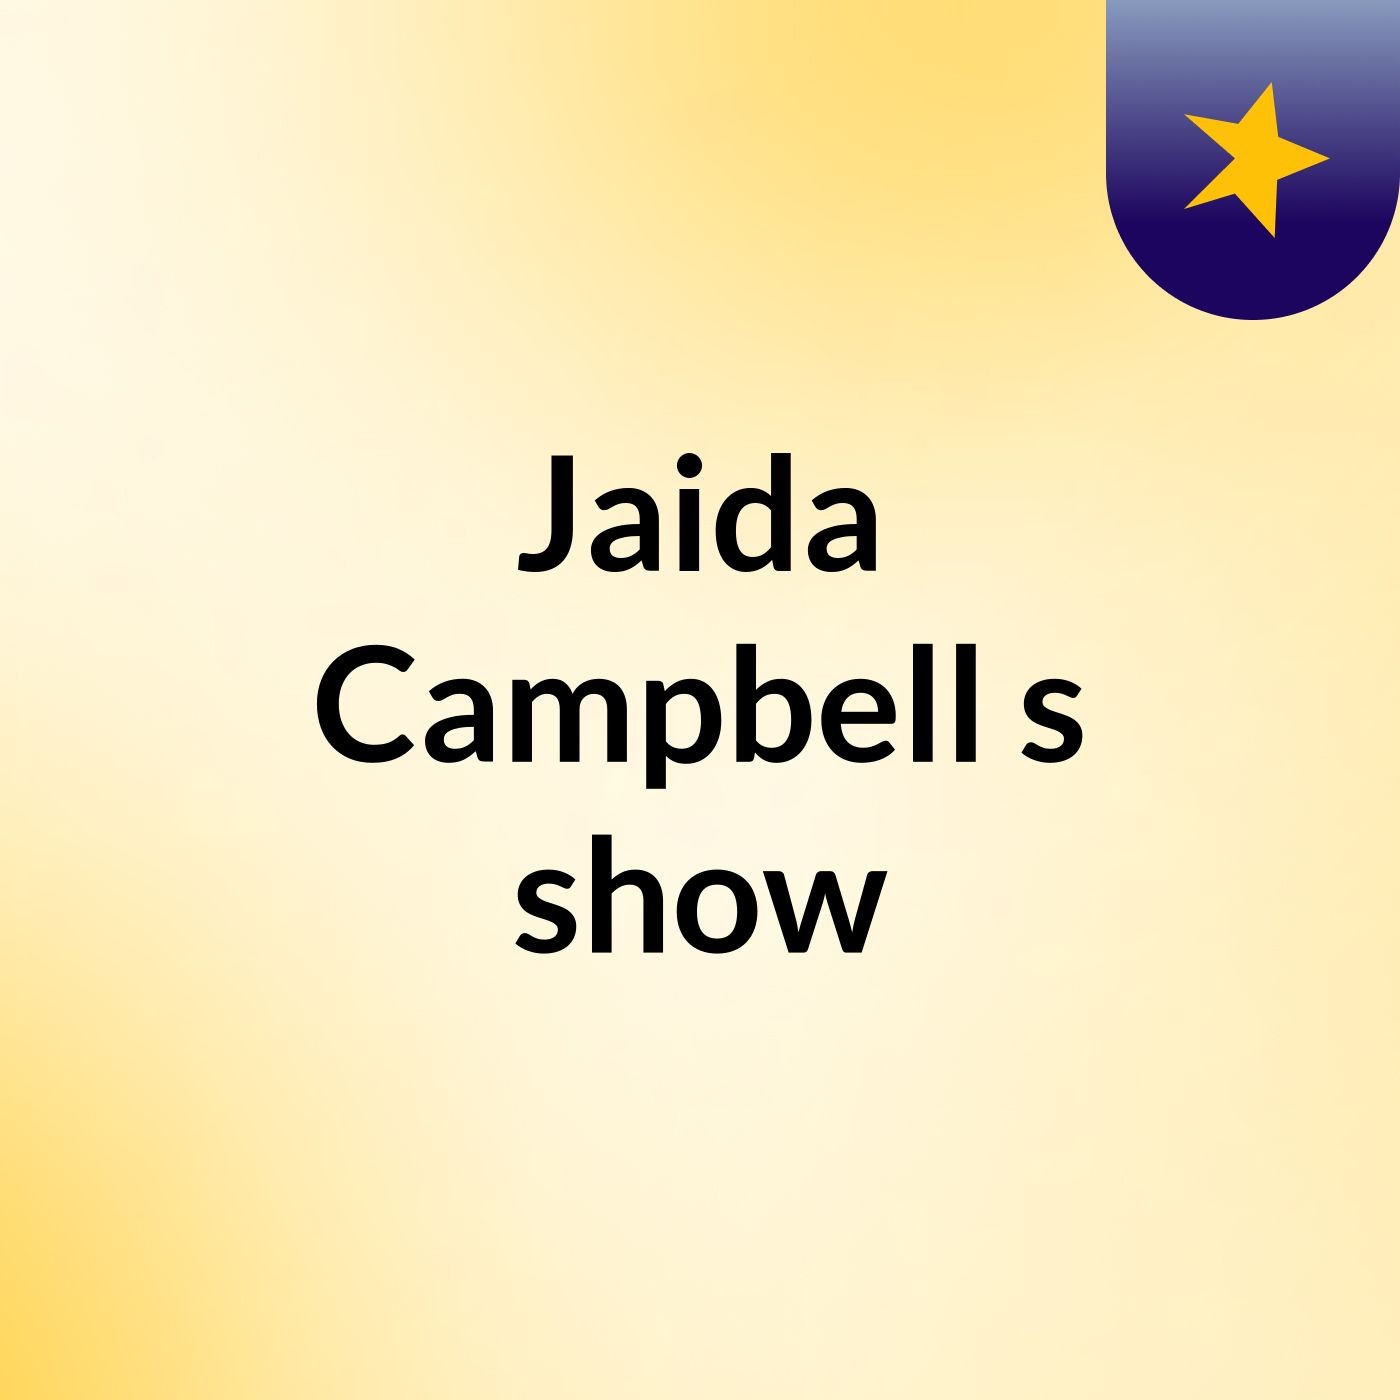 Jaida Campbell's show